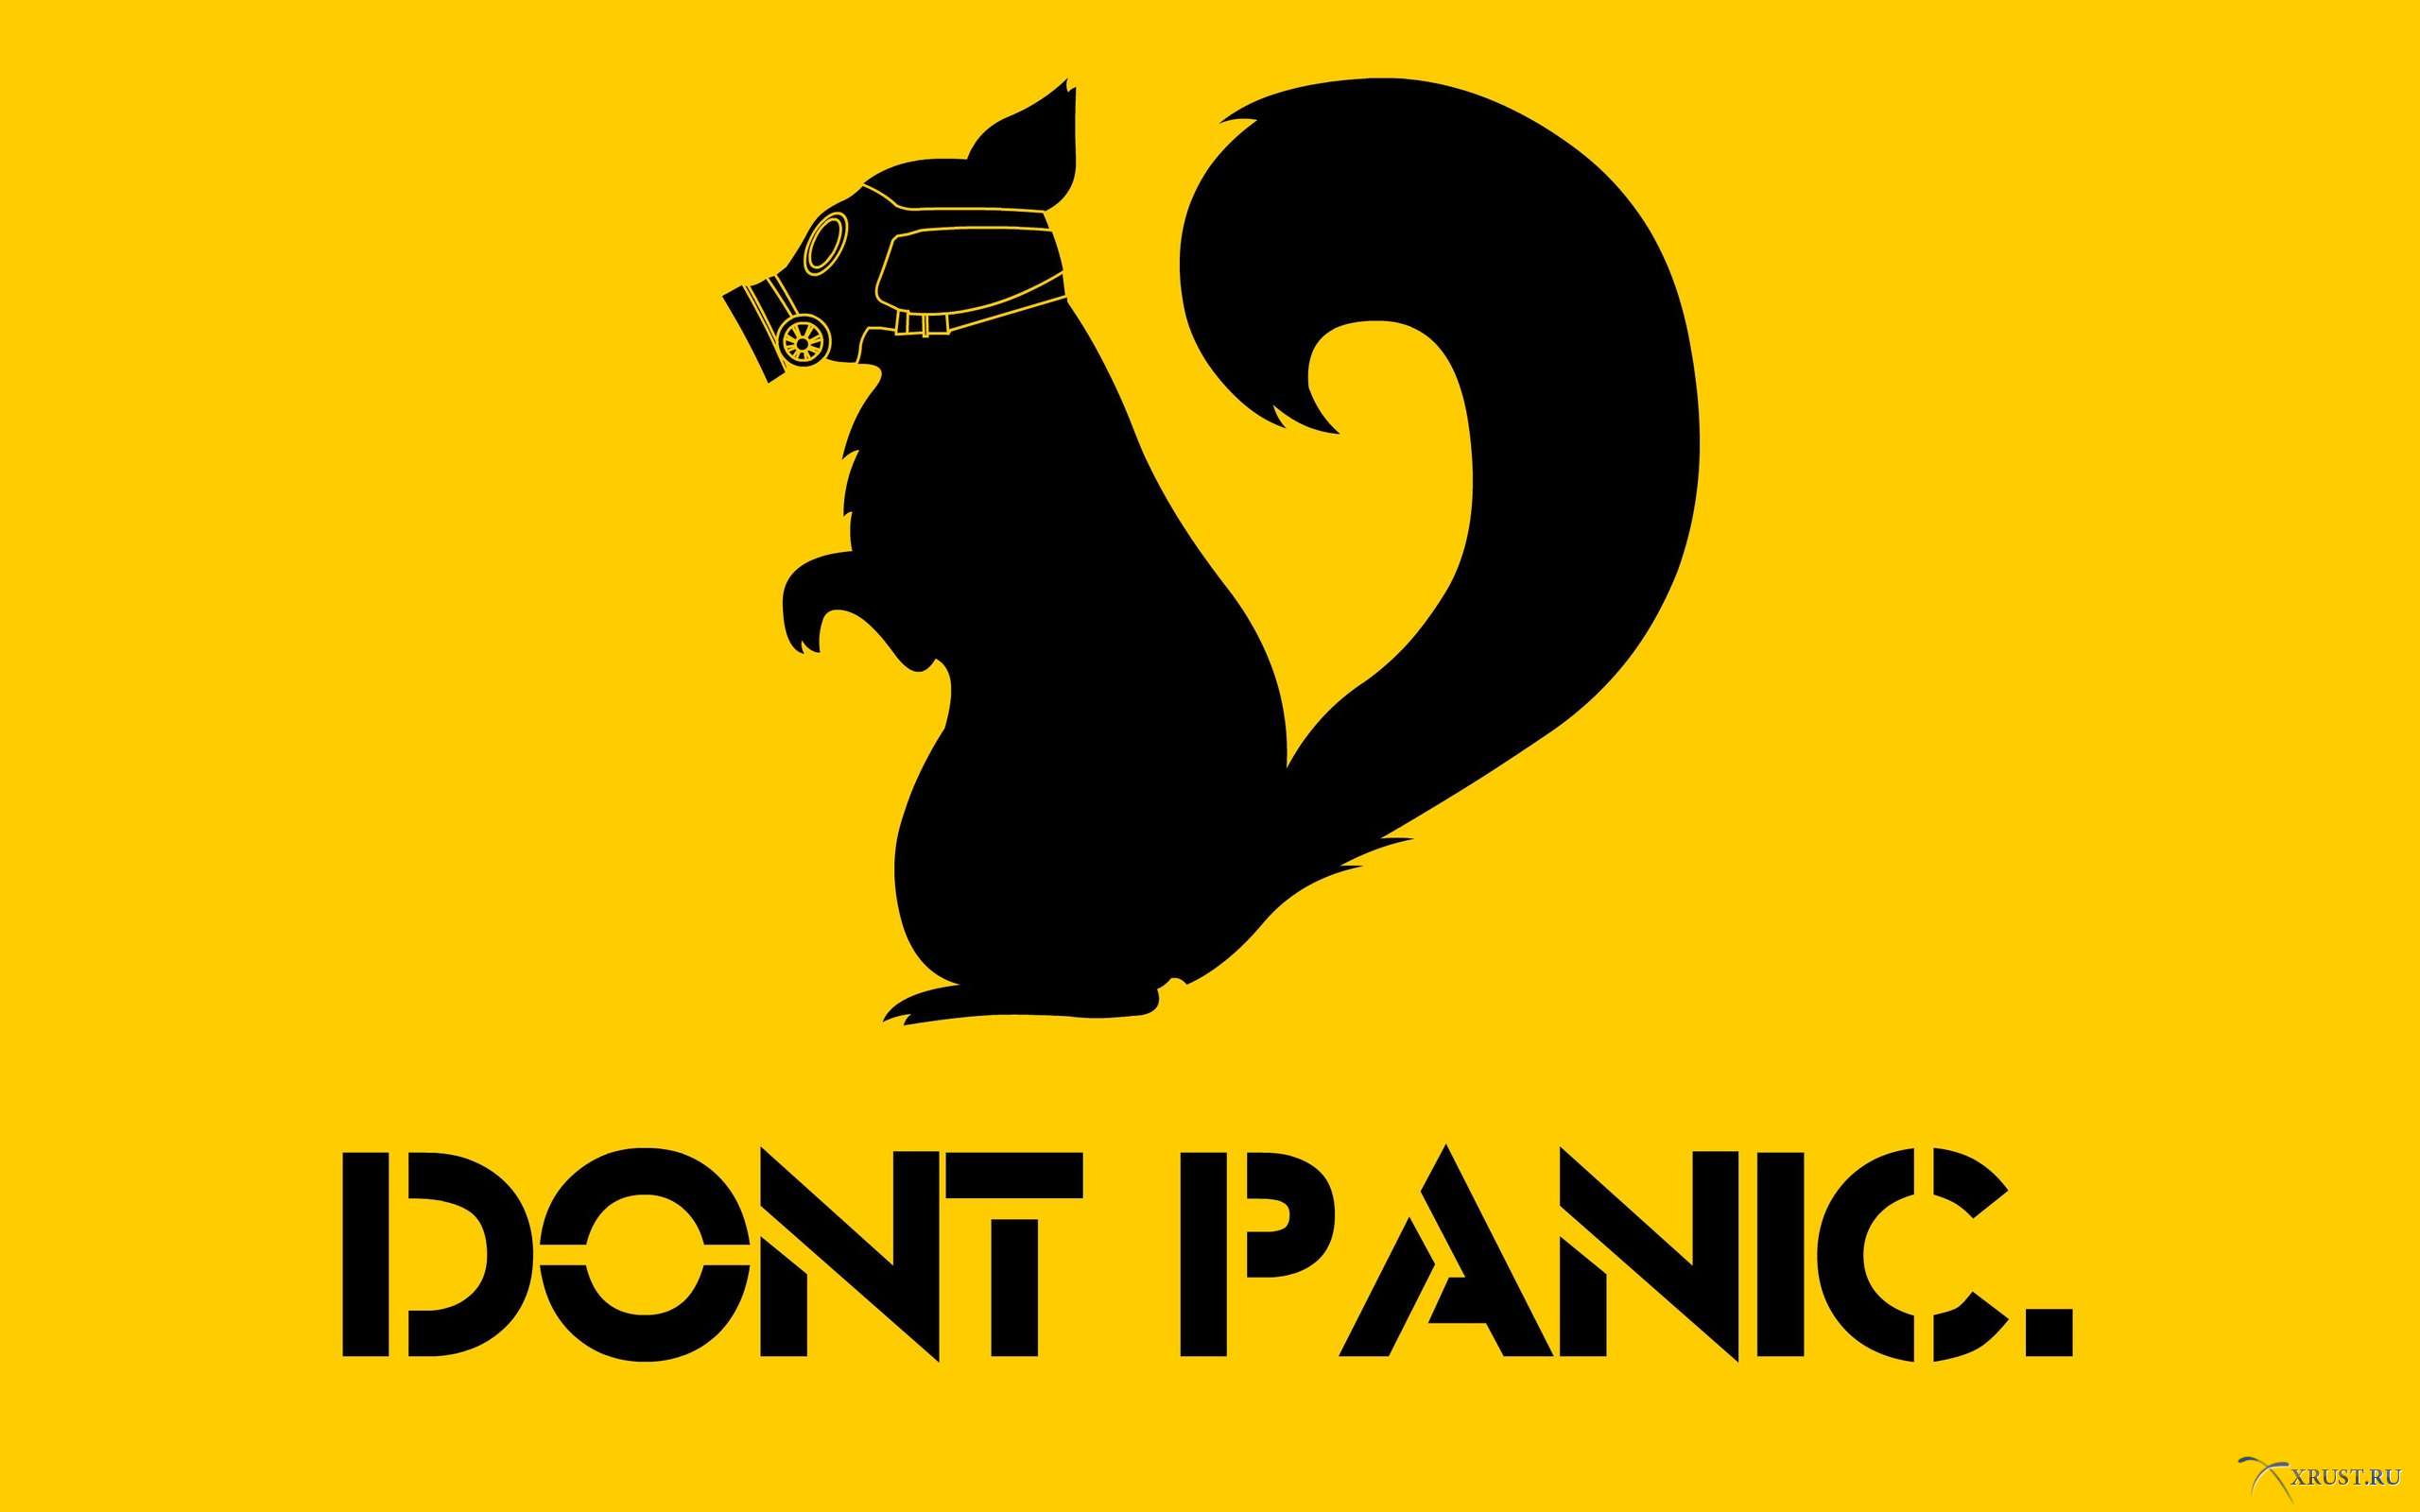 Don’t panic.